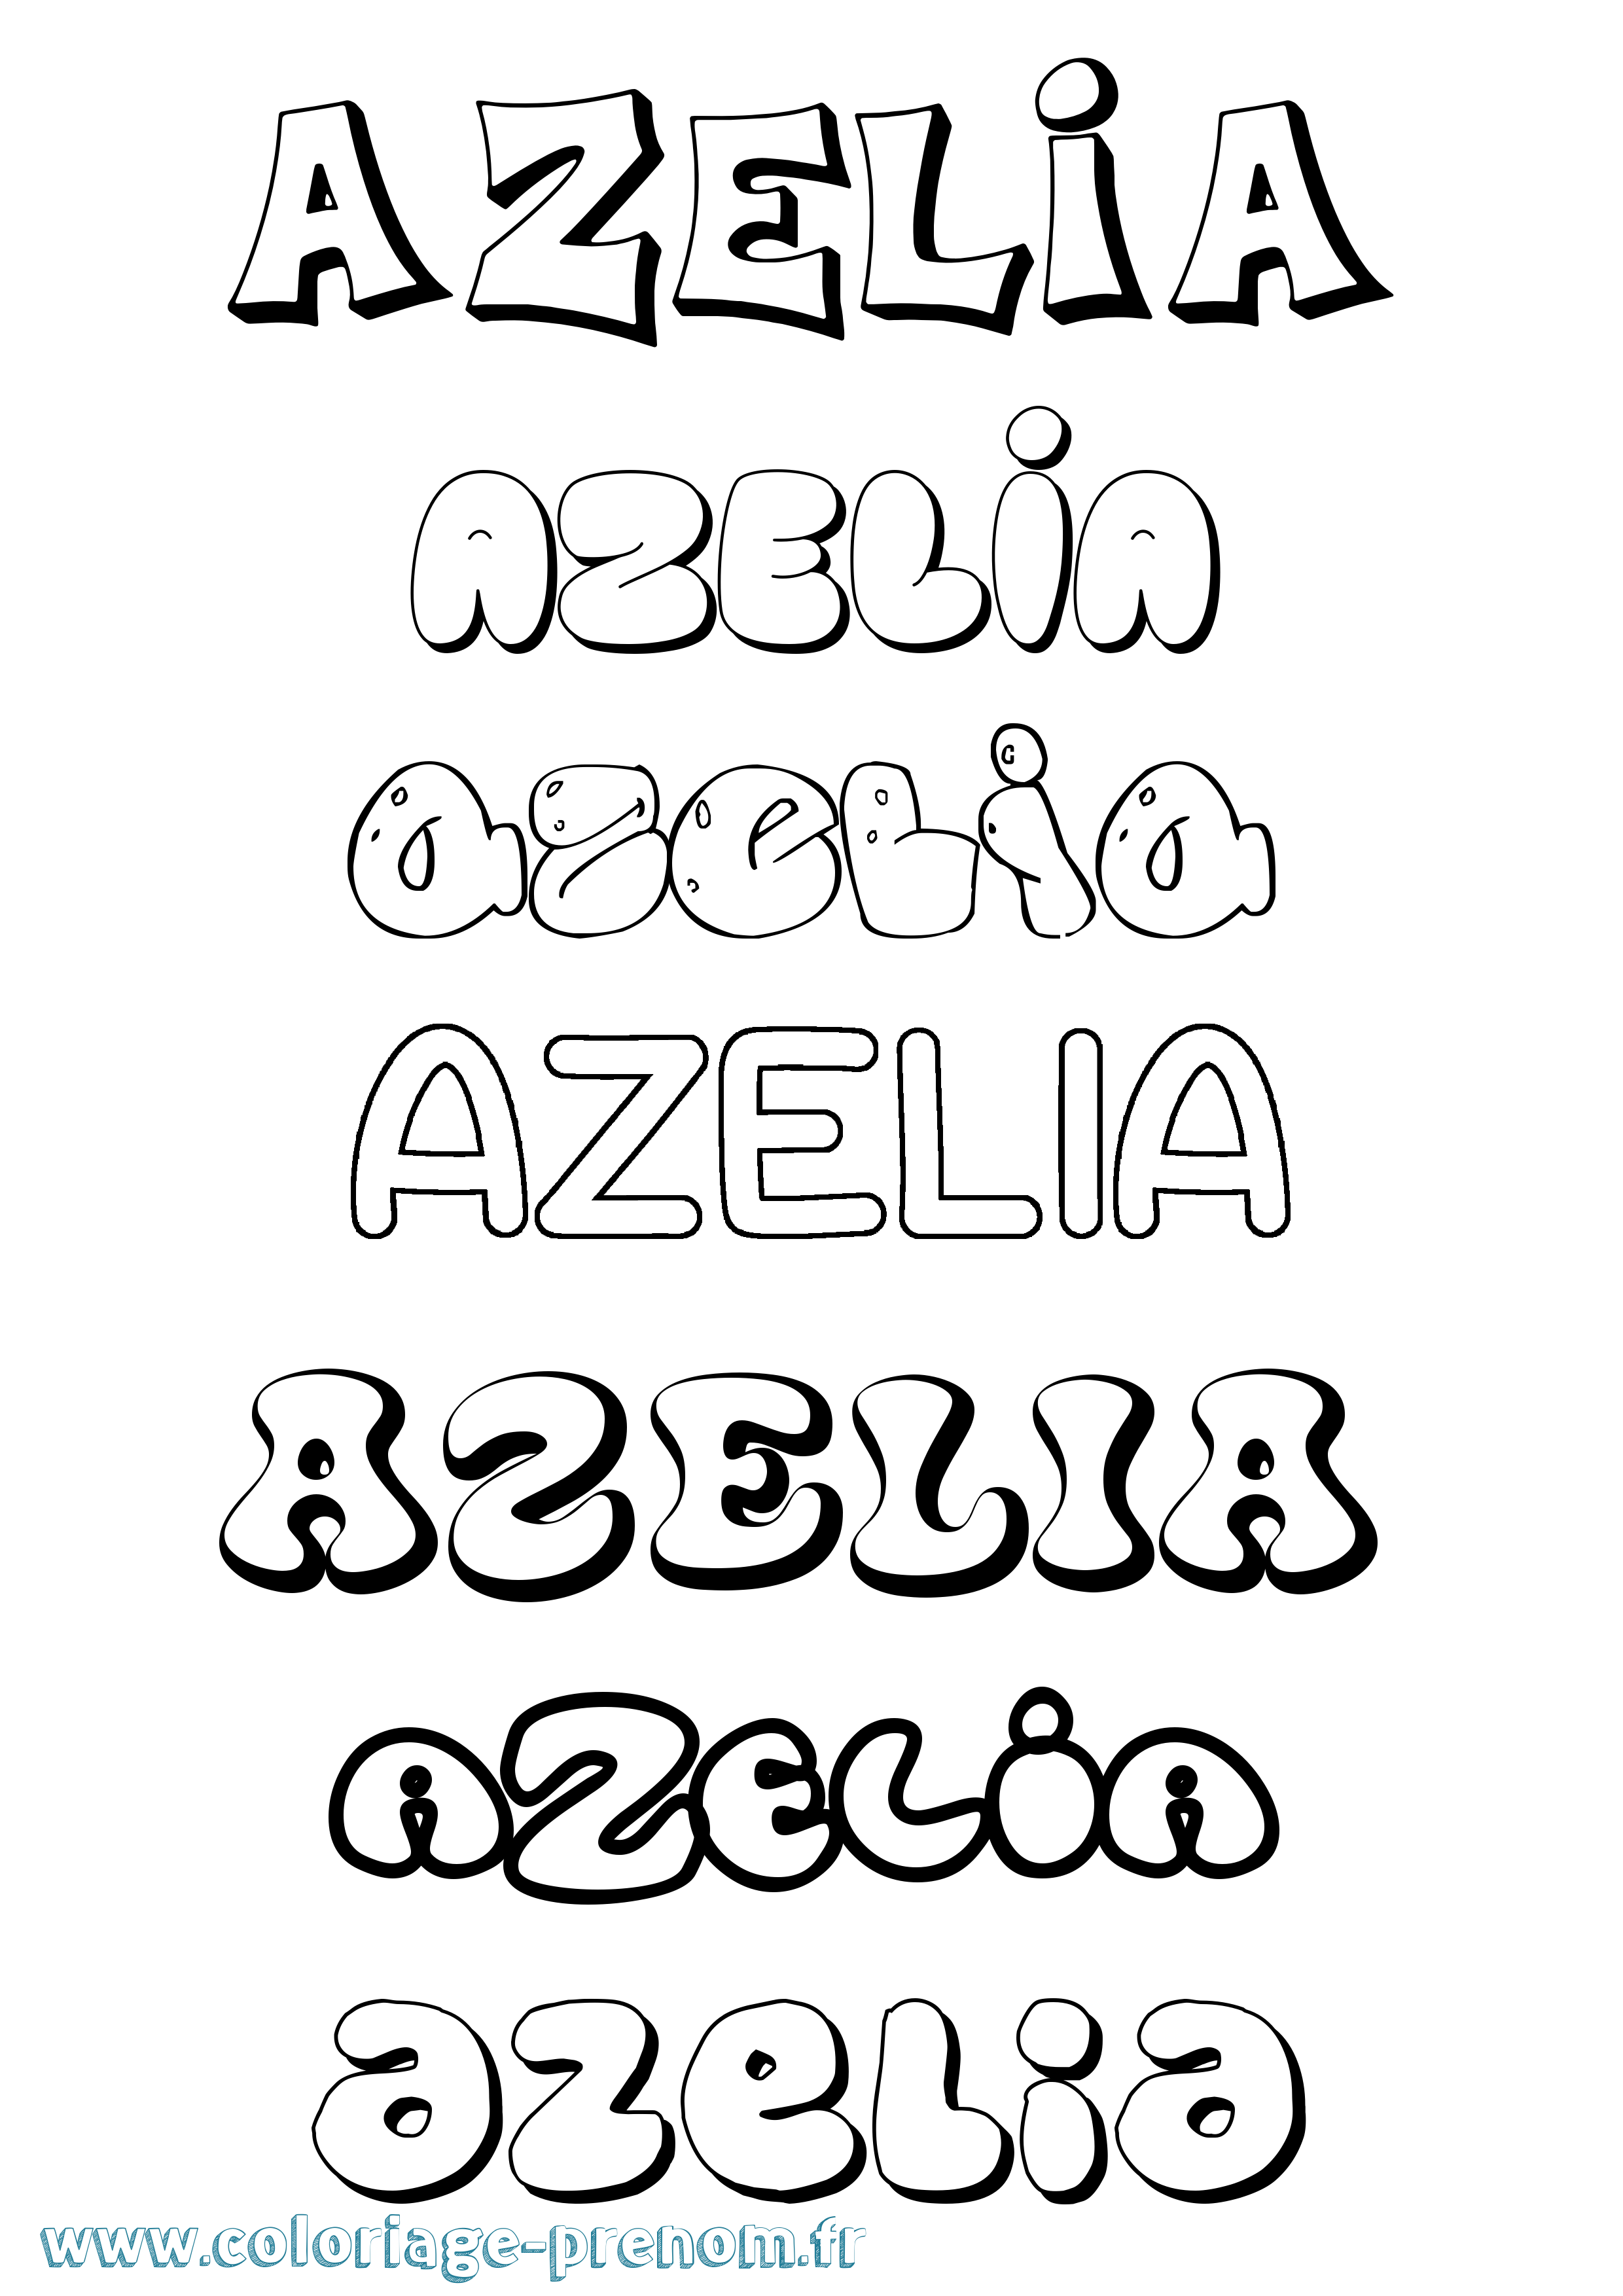 Coloriage prénom Azelia Bubble